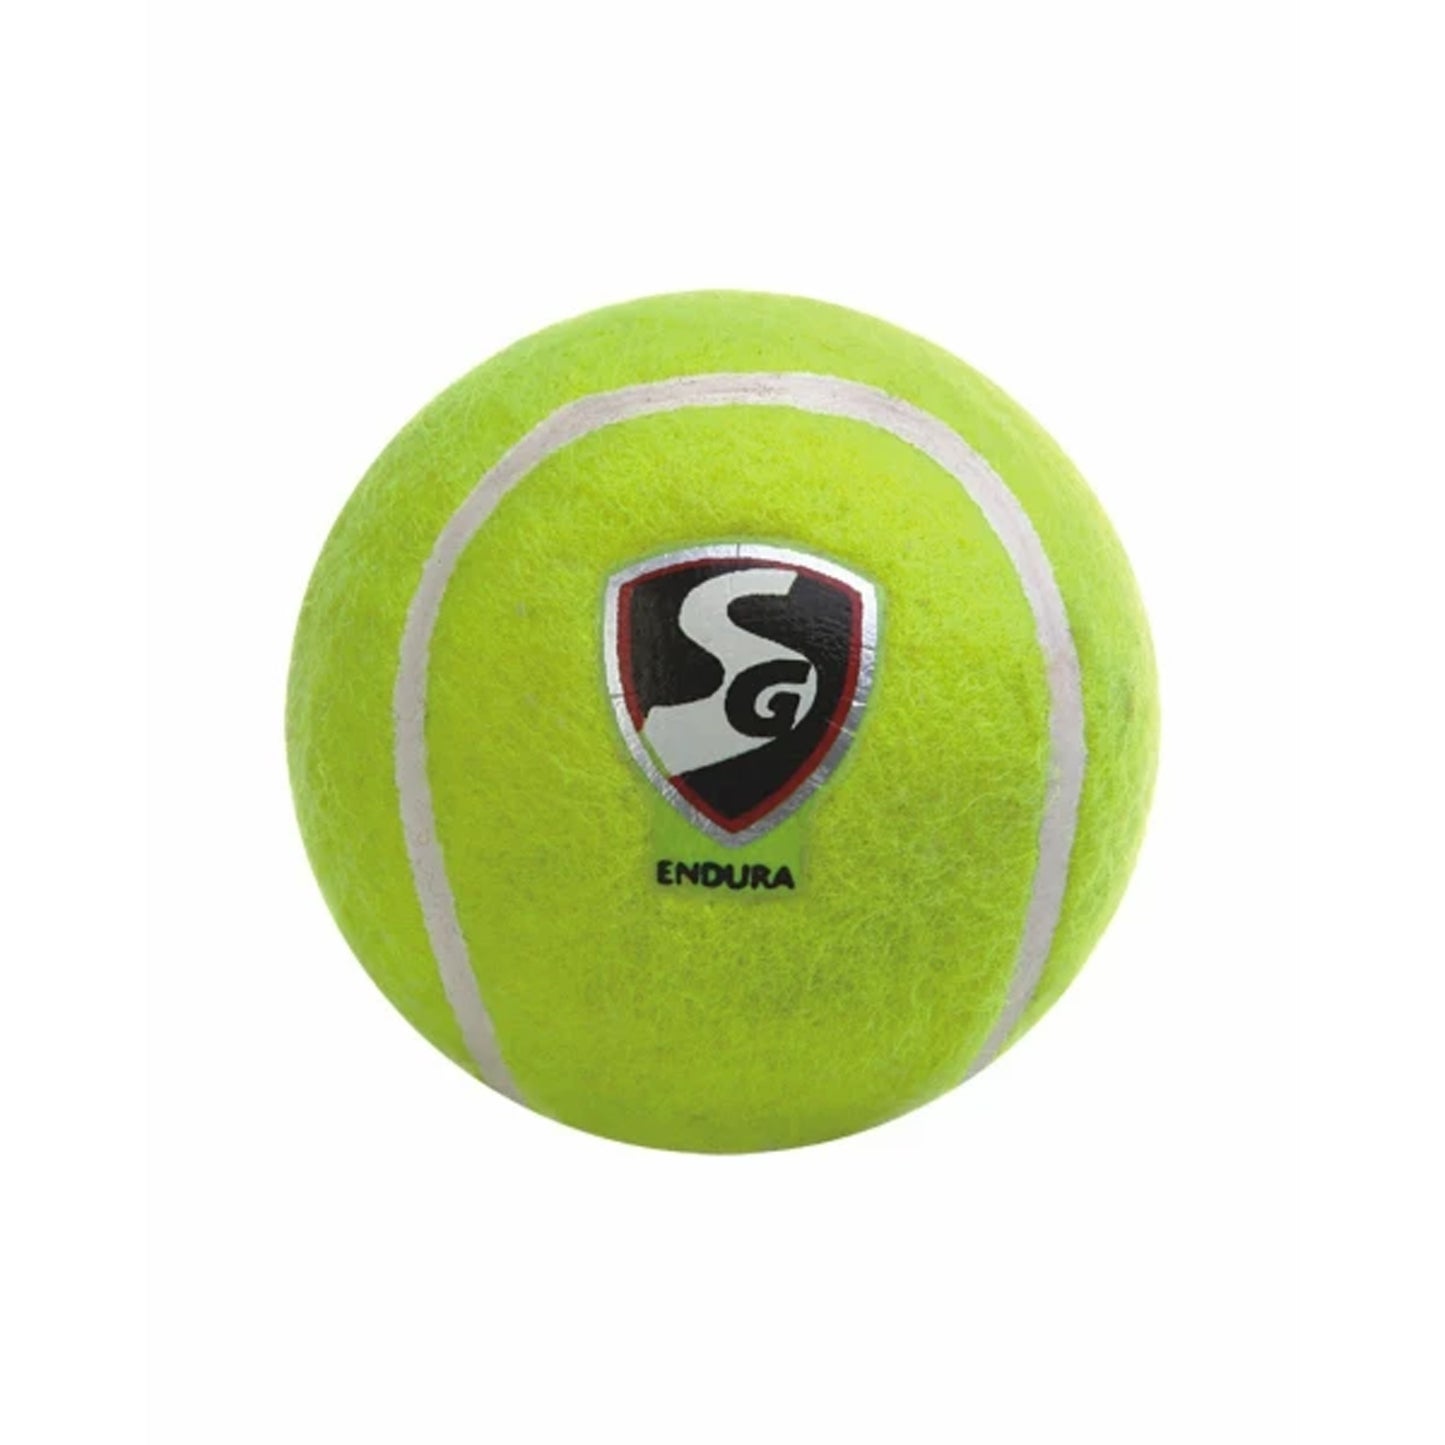 SG Endura Heavy Weight Cricket Tennis Ball, 1Pc - Yellow - Best Price online Prokicksports.com